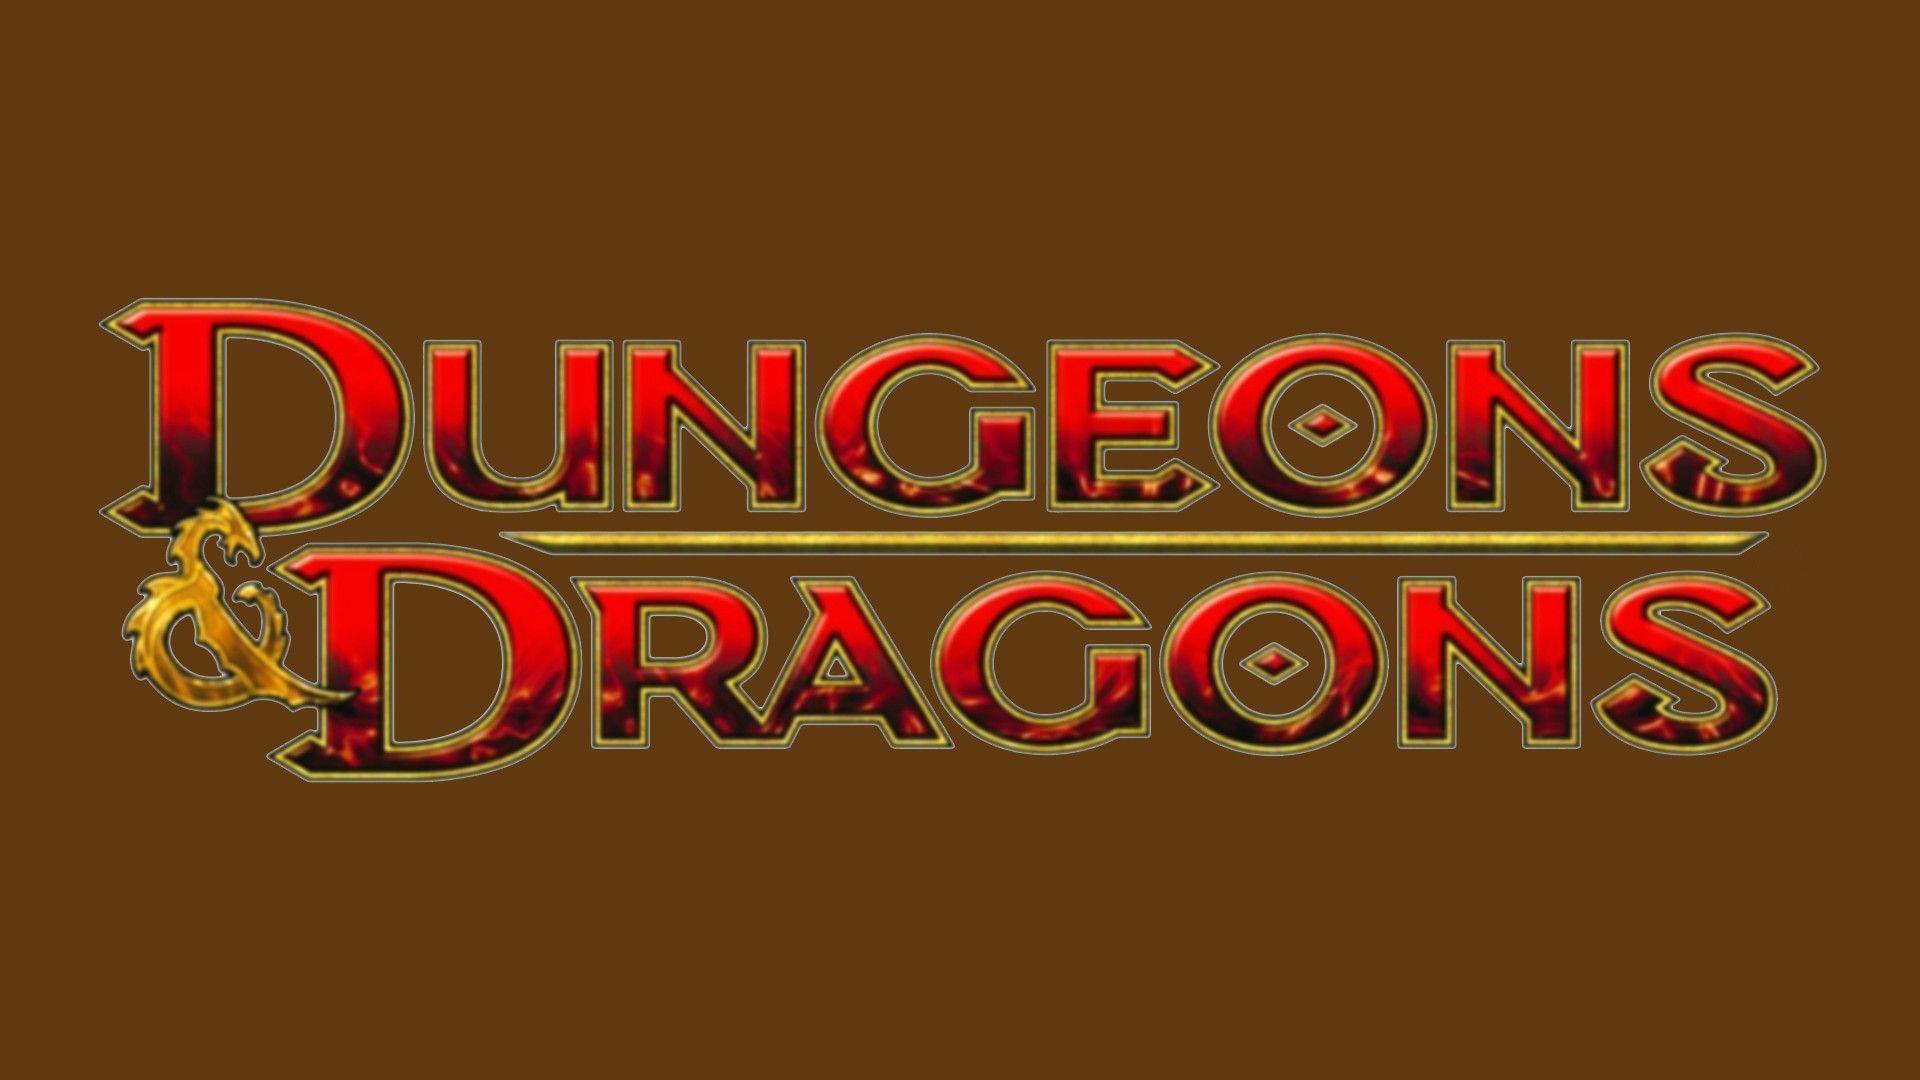 Dungeons & Dragons Computer Wallpaper, Desktop Background